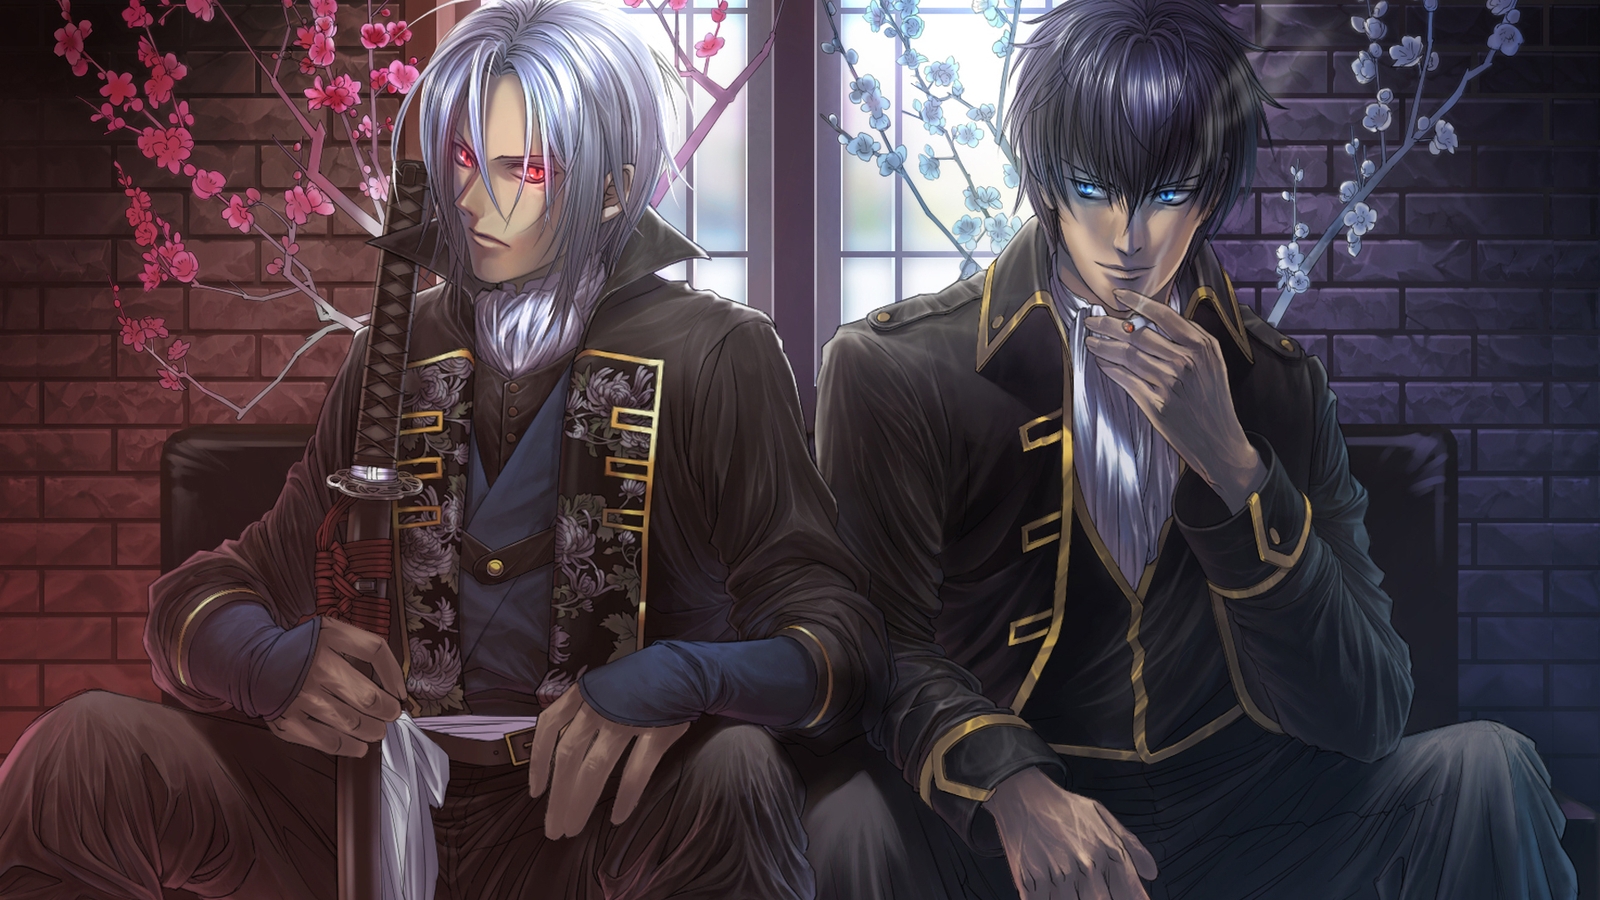 Image: Gintama, boys, Hijikata Toshizou, Hijikata Toushirou, sitting, sword, katana, Demons pale cherry, smoke, flowers, window